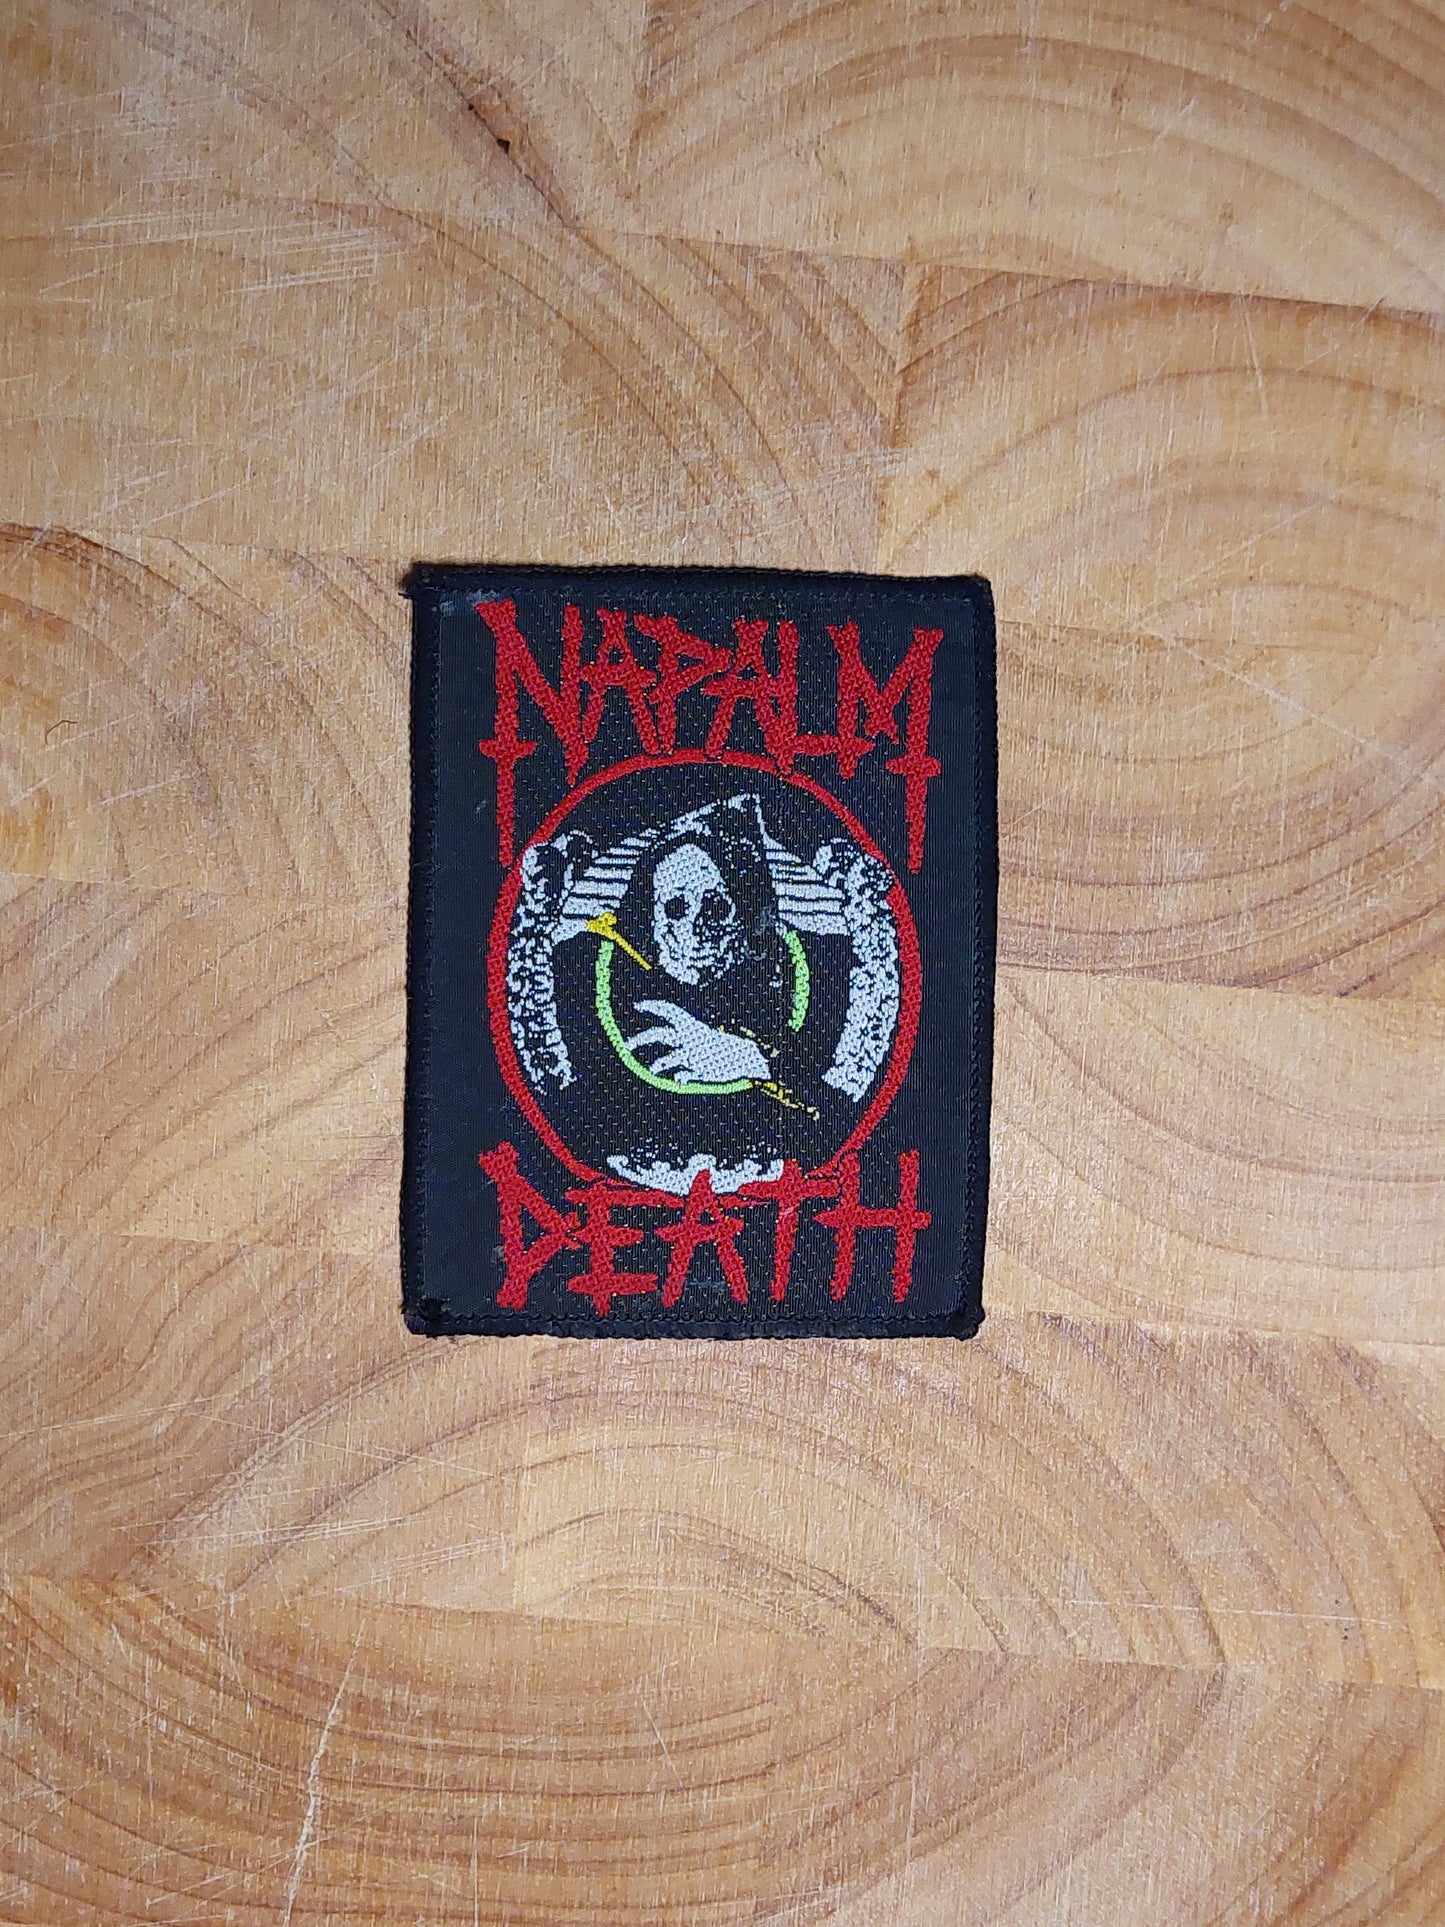 Napalm death life